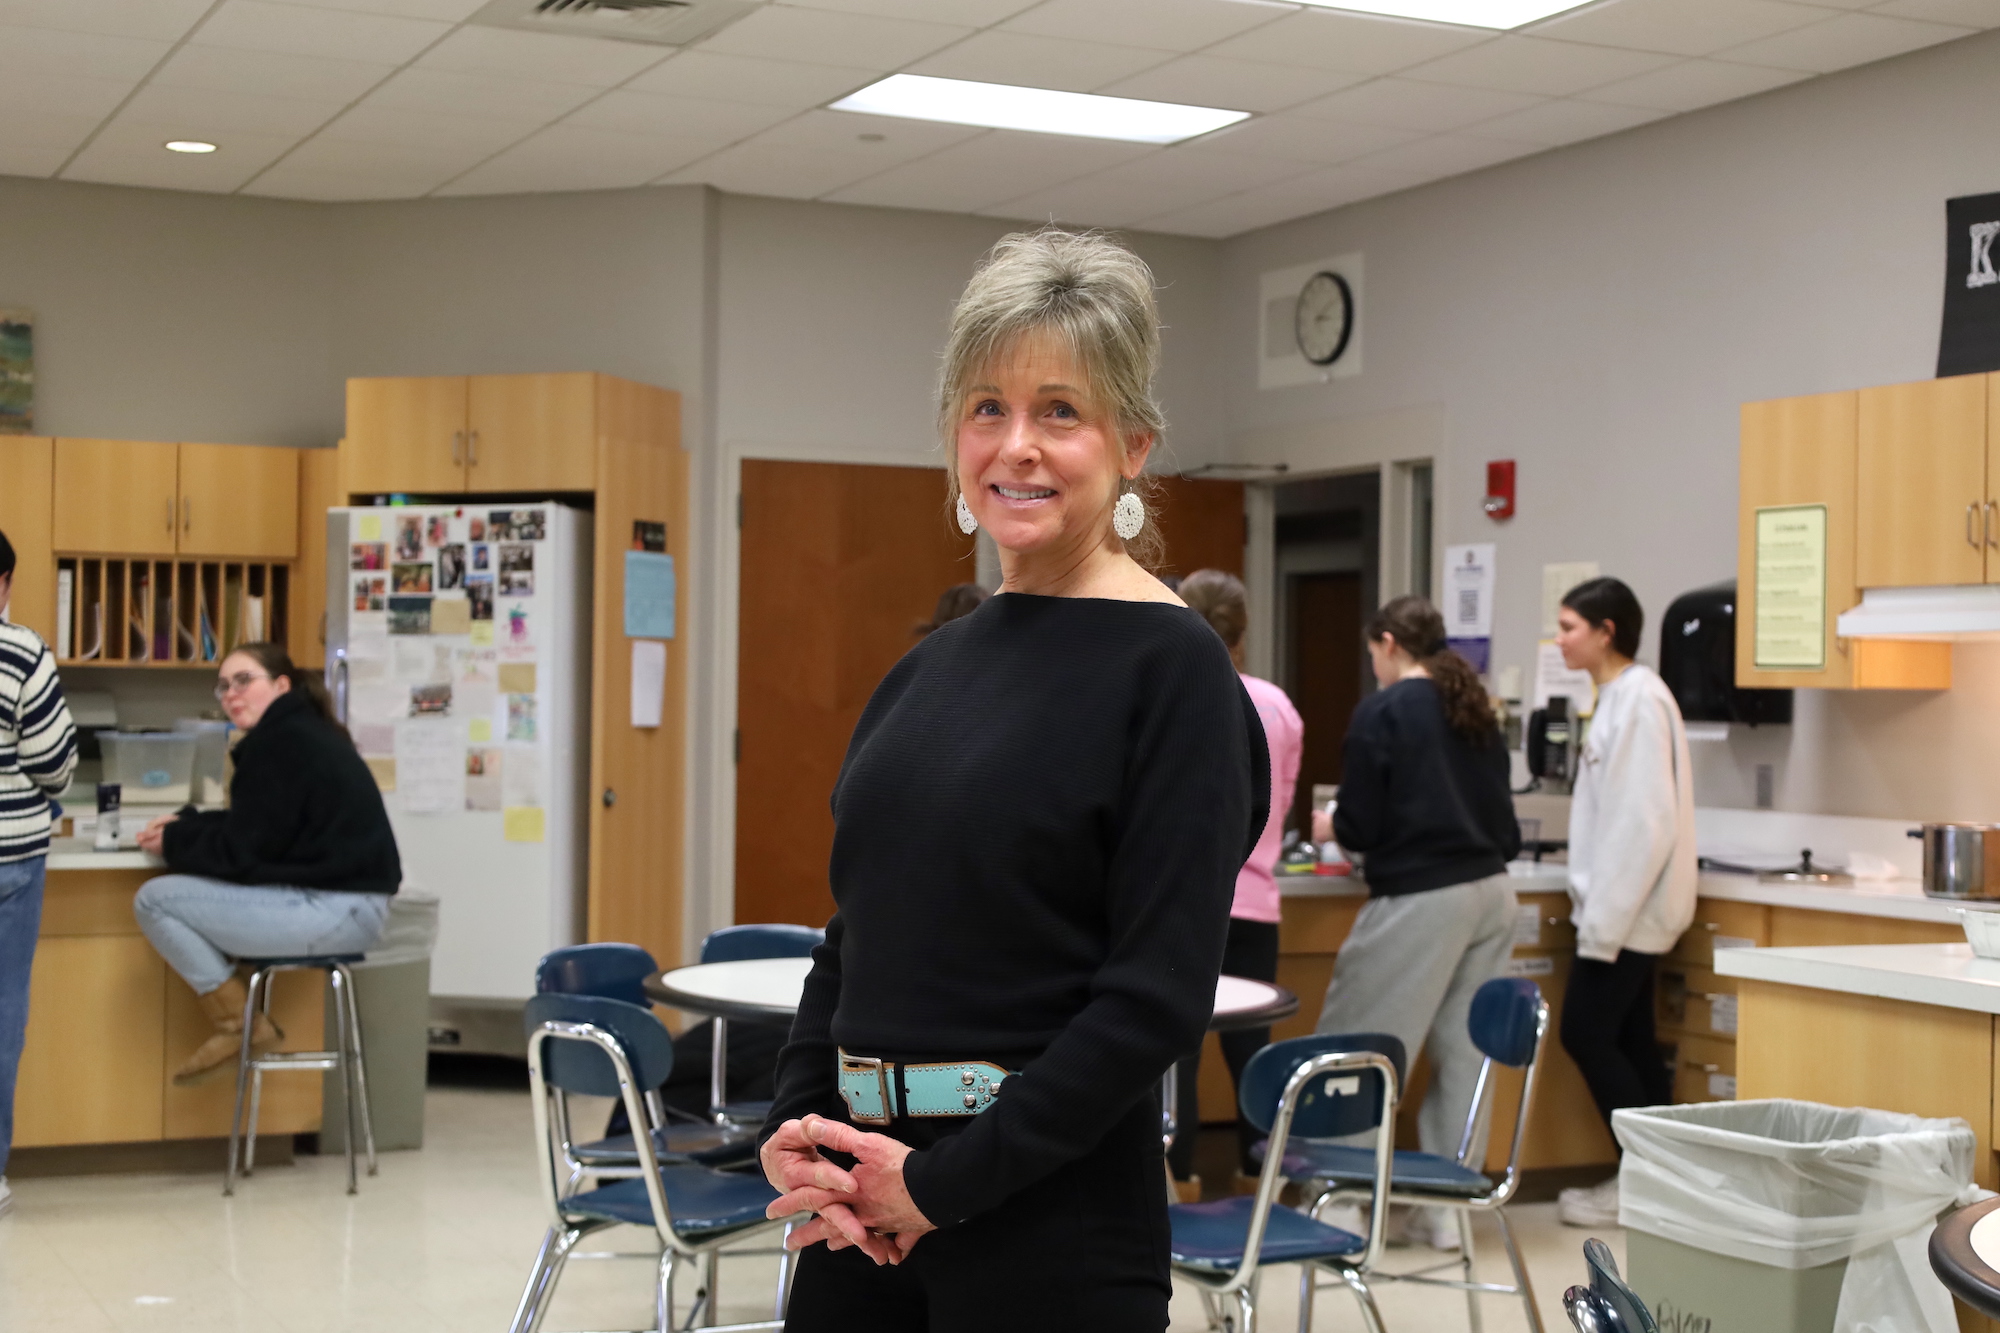 Shirley LeMay is Shrewsbury’s longest-tenured educator